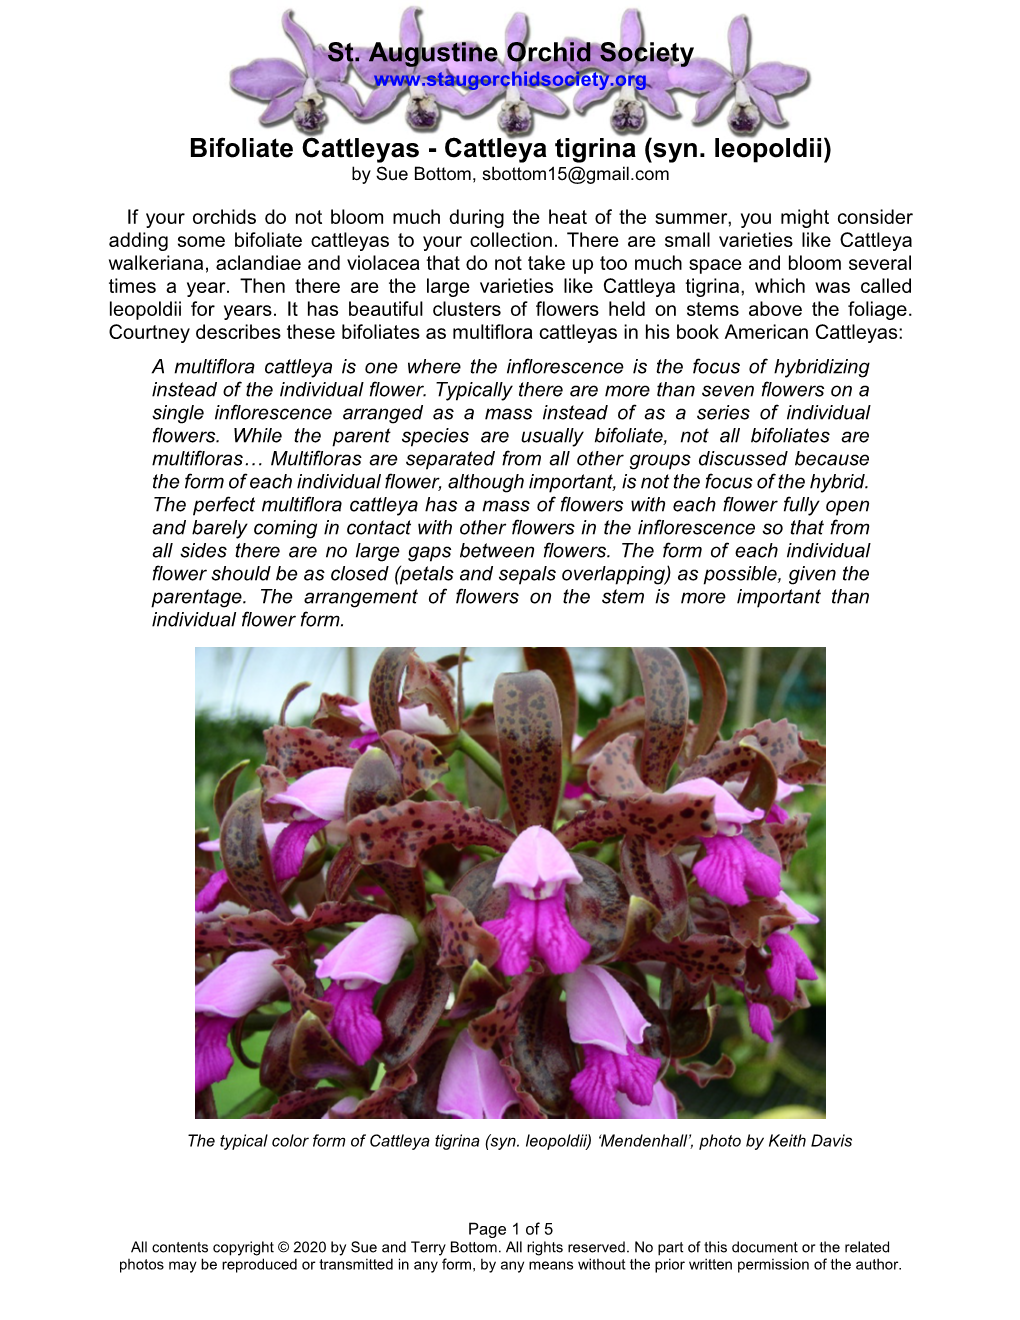 Bifoliate Cattleyas - Cattleya Tigrina (Syn